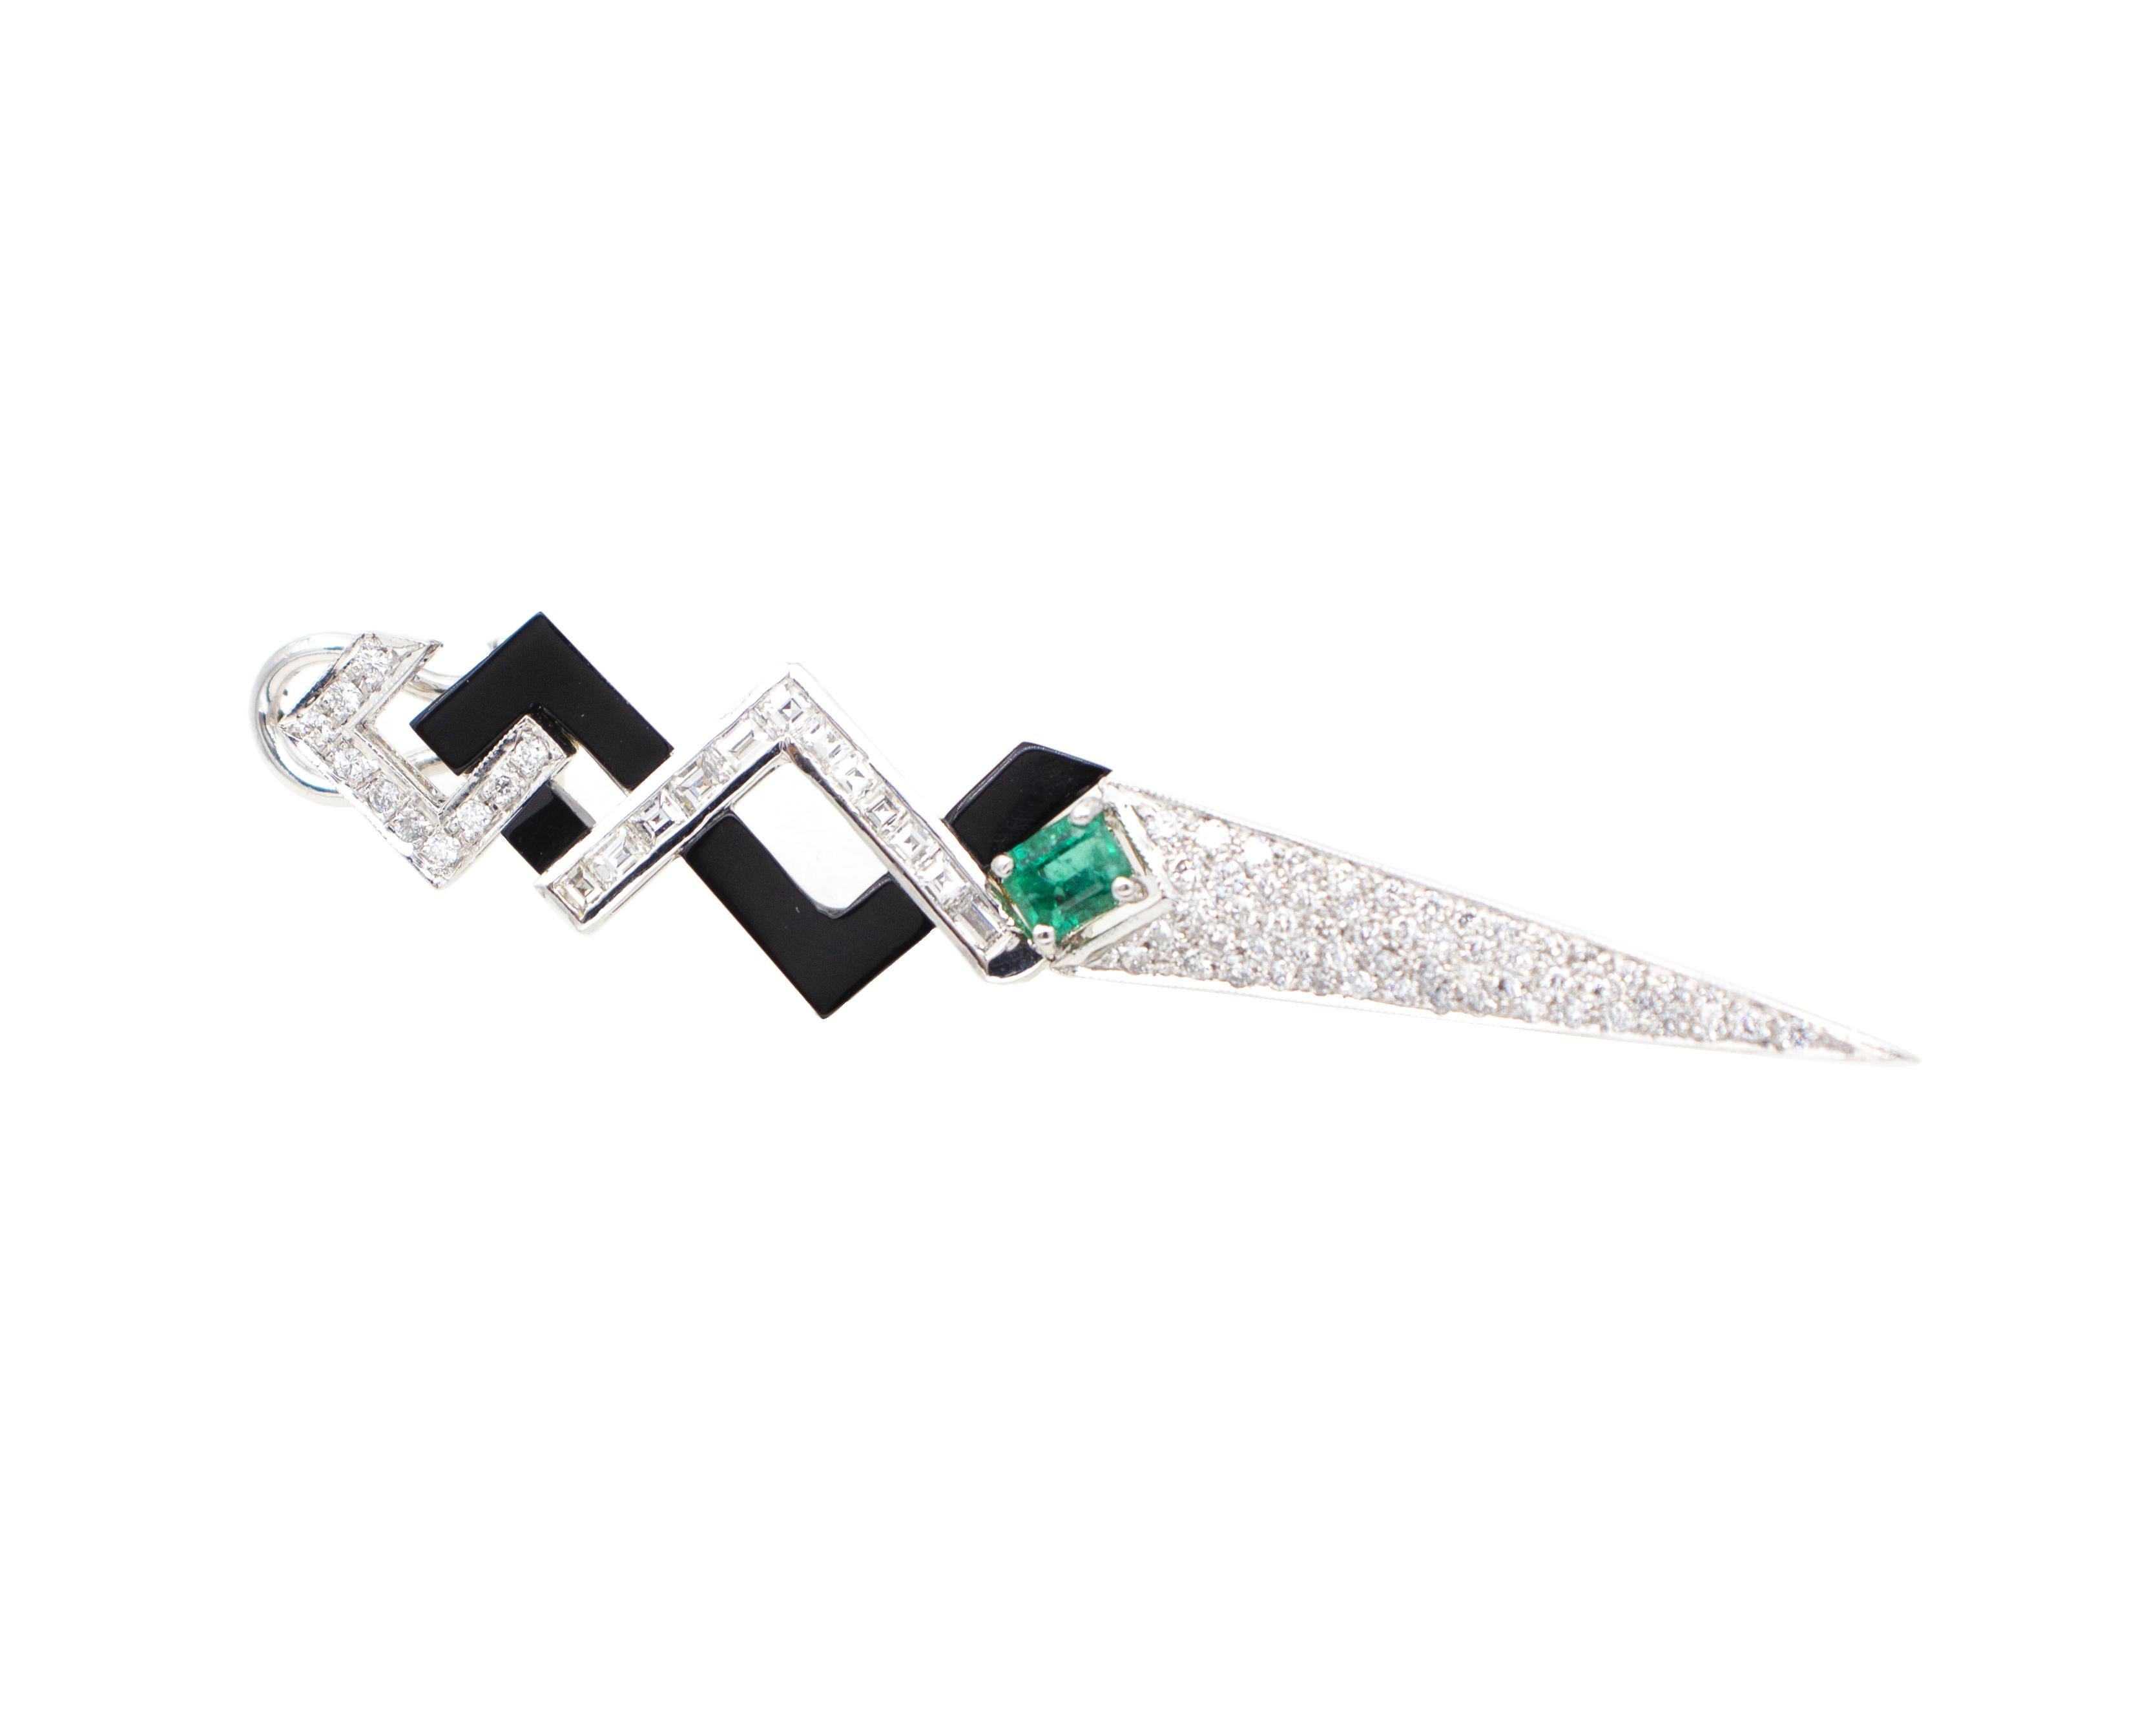 Retro Platinum Diamonds Fancy Cuts, Emeralds, Onyx, Clip-On Fashion Earrings